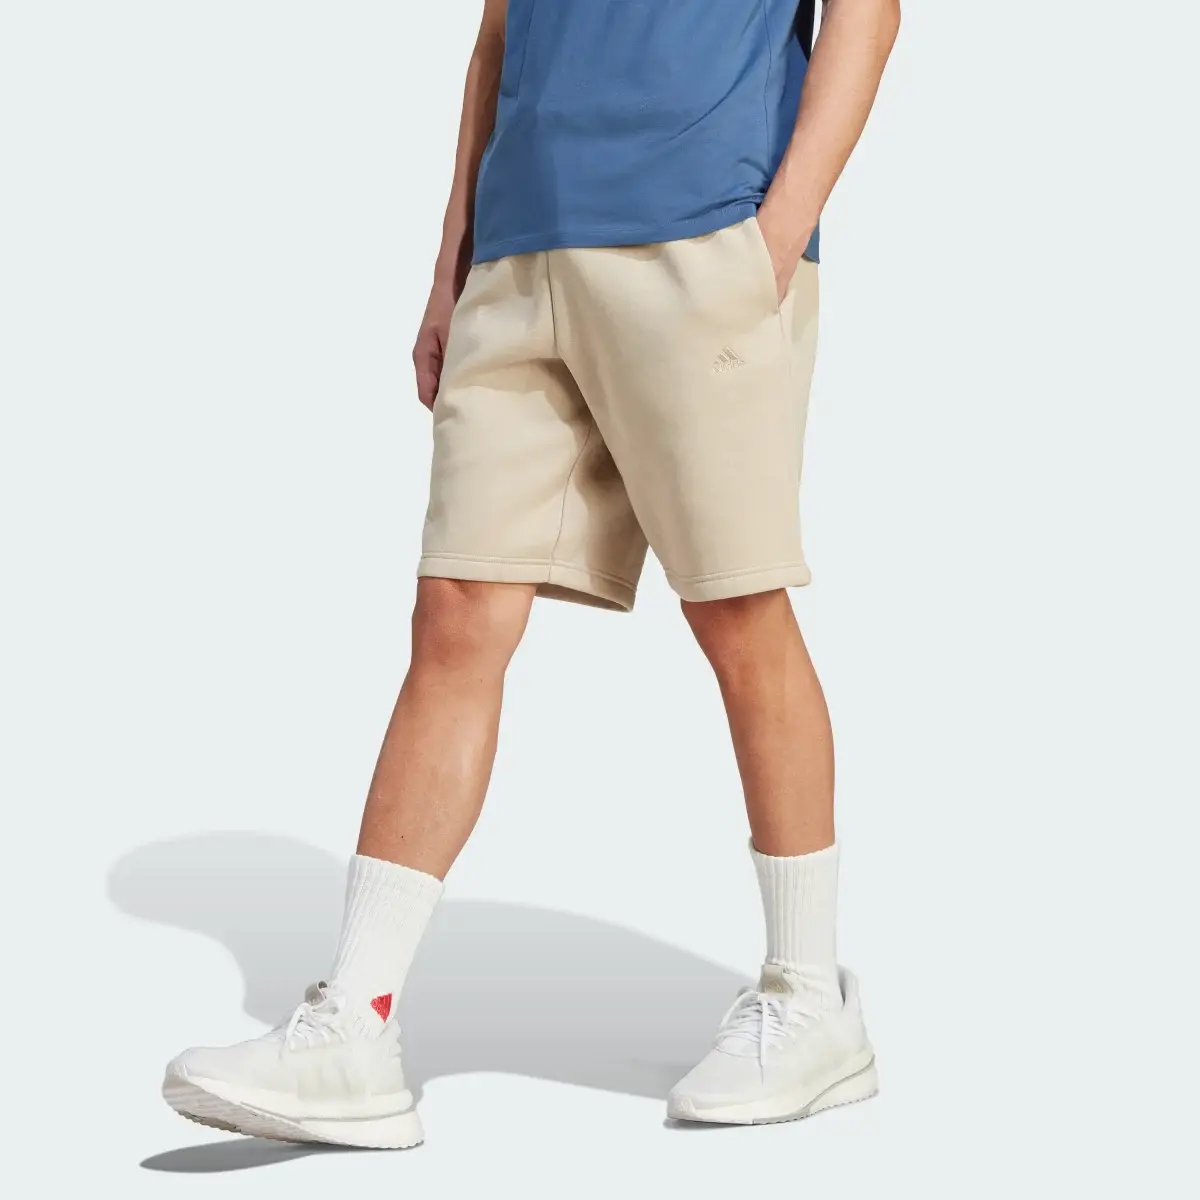 Adidas Short All SZN Fleece. 1